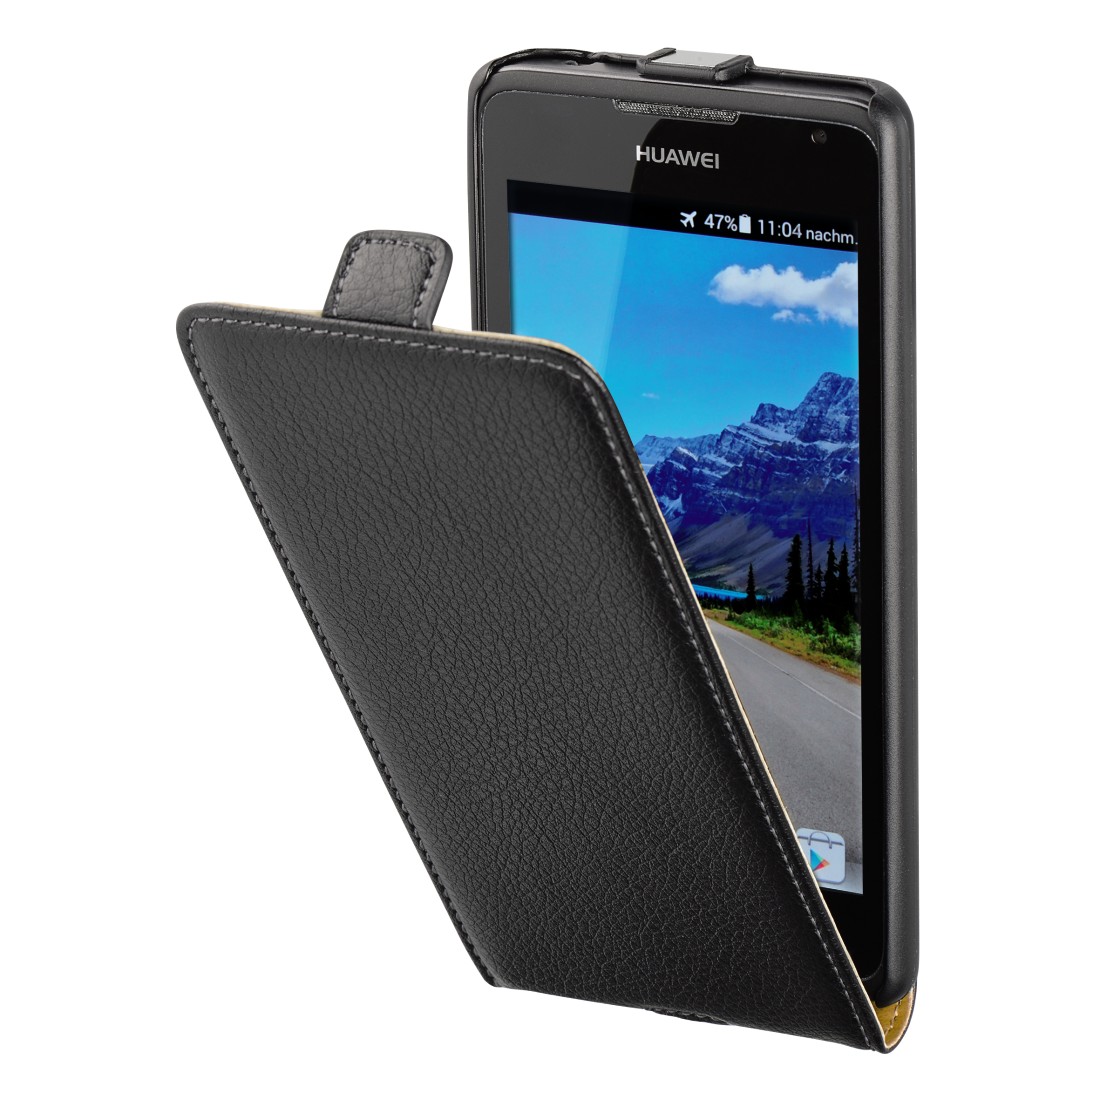 00091455 Hama "Smart Case" Flap Case for Huawei Ascend Y530, black